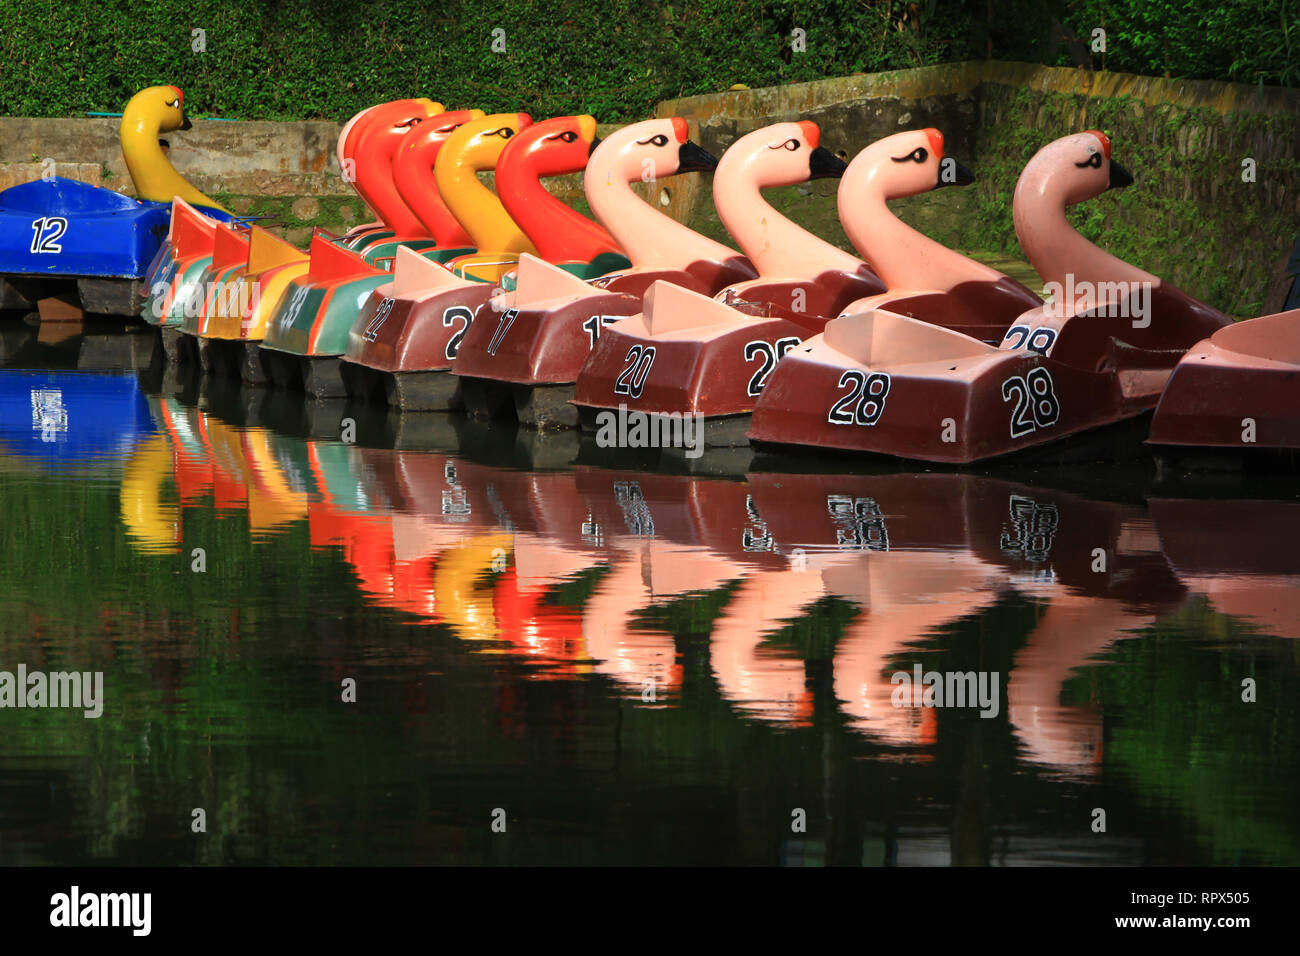 Flamingo pedalos in a row on a lake, Indonesia Stock Photo